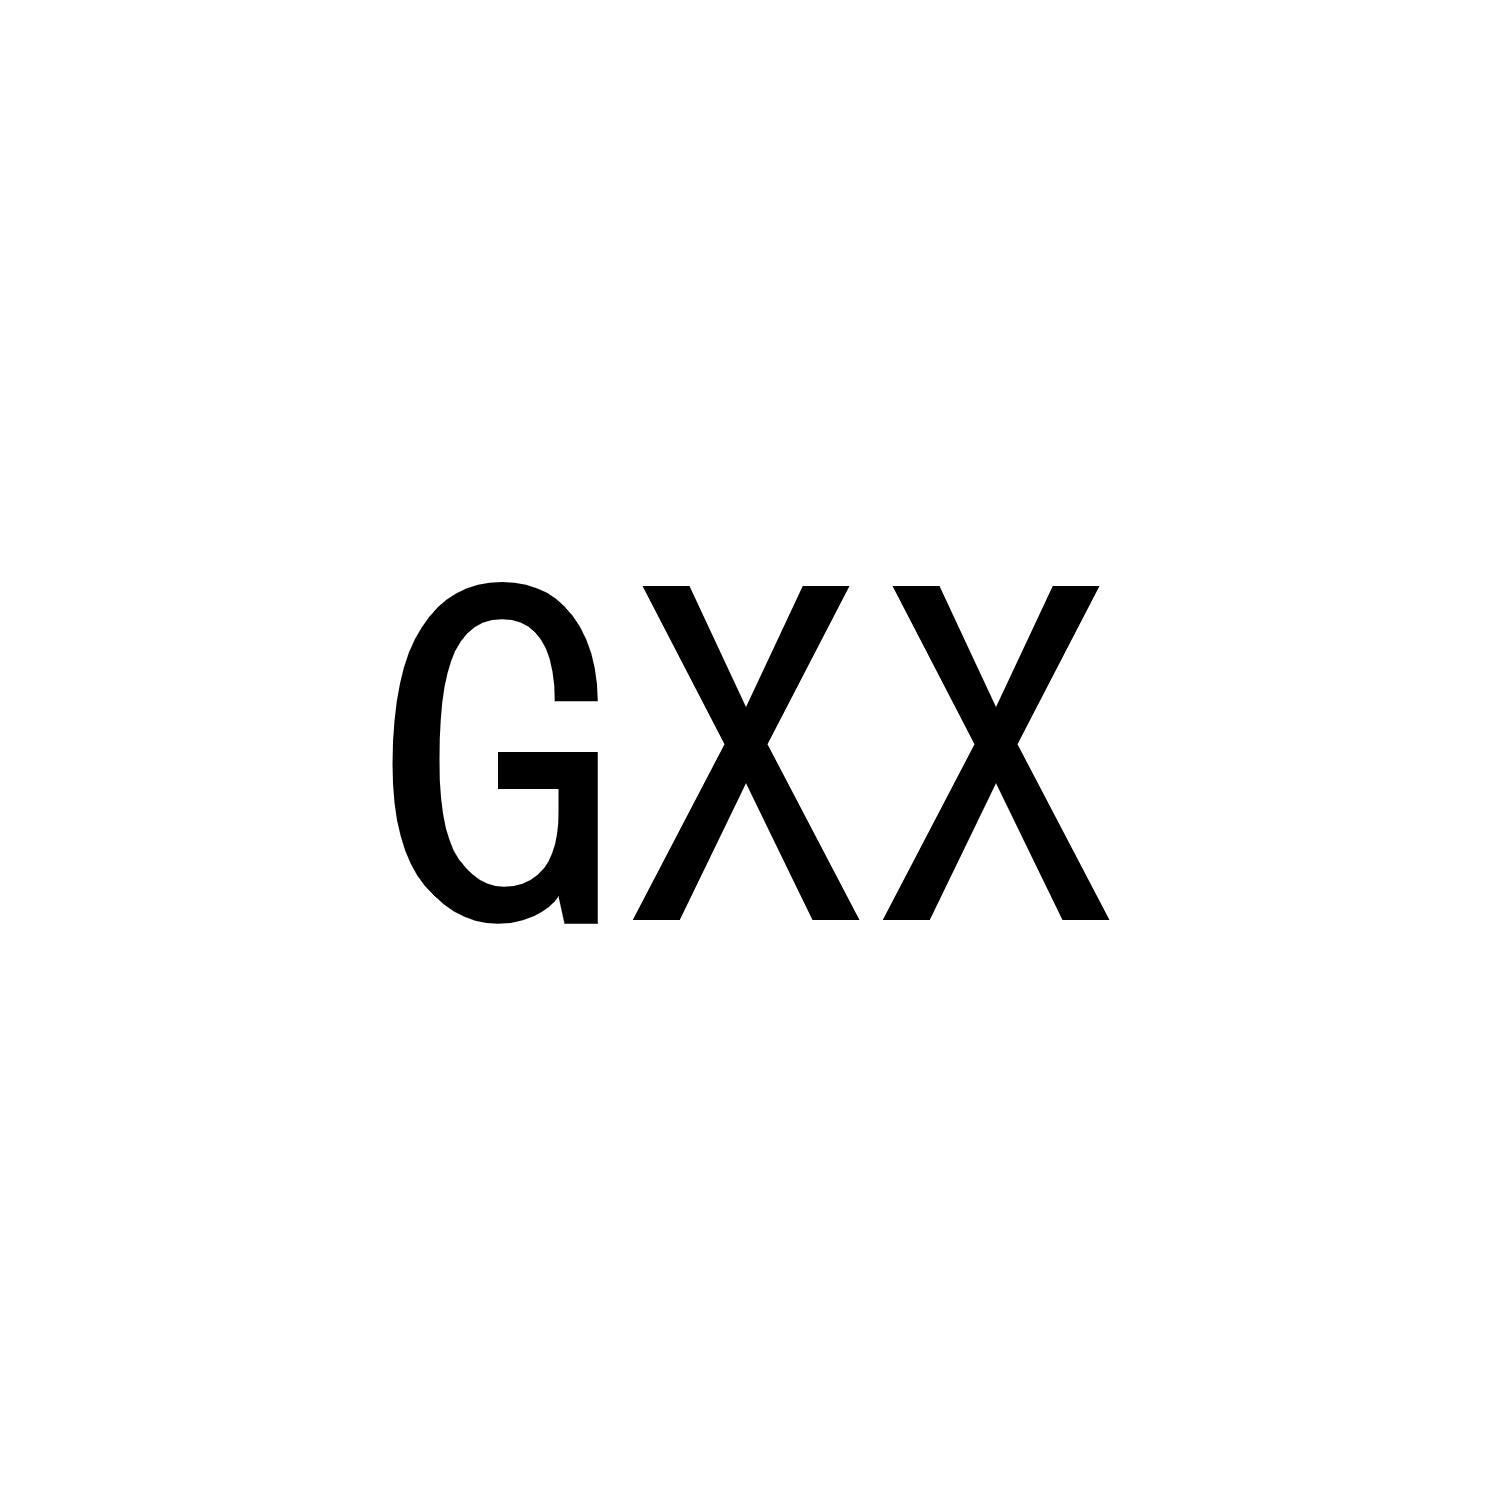 GXX